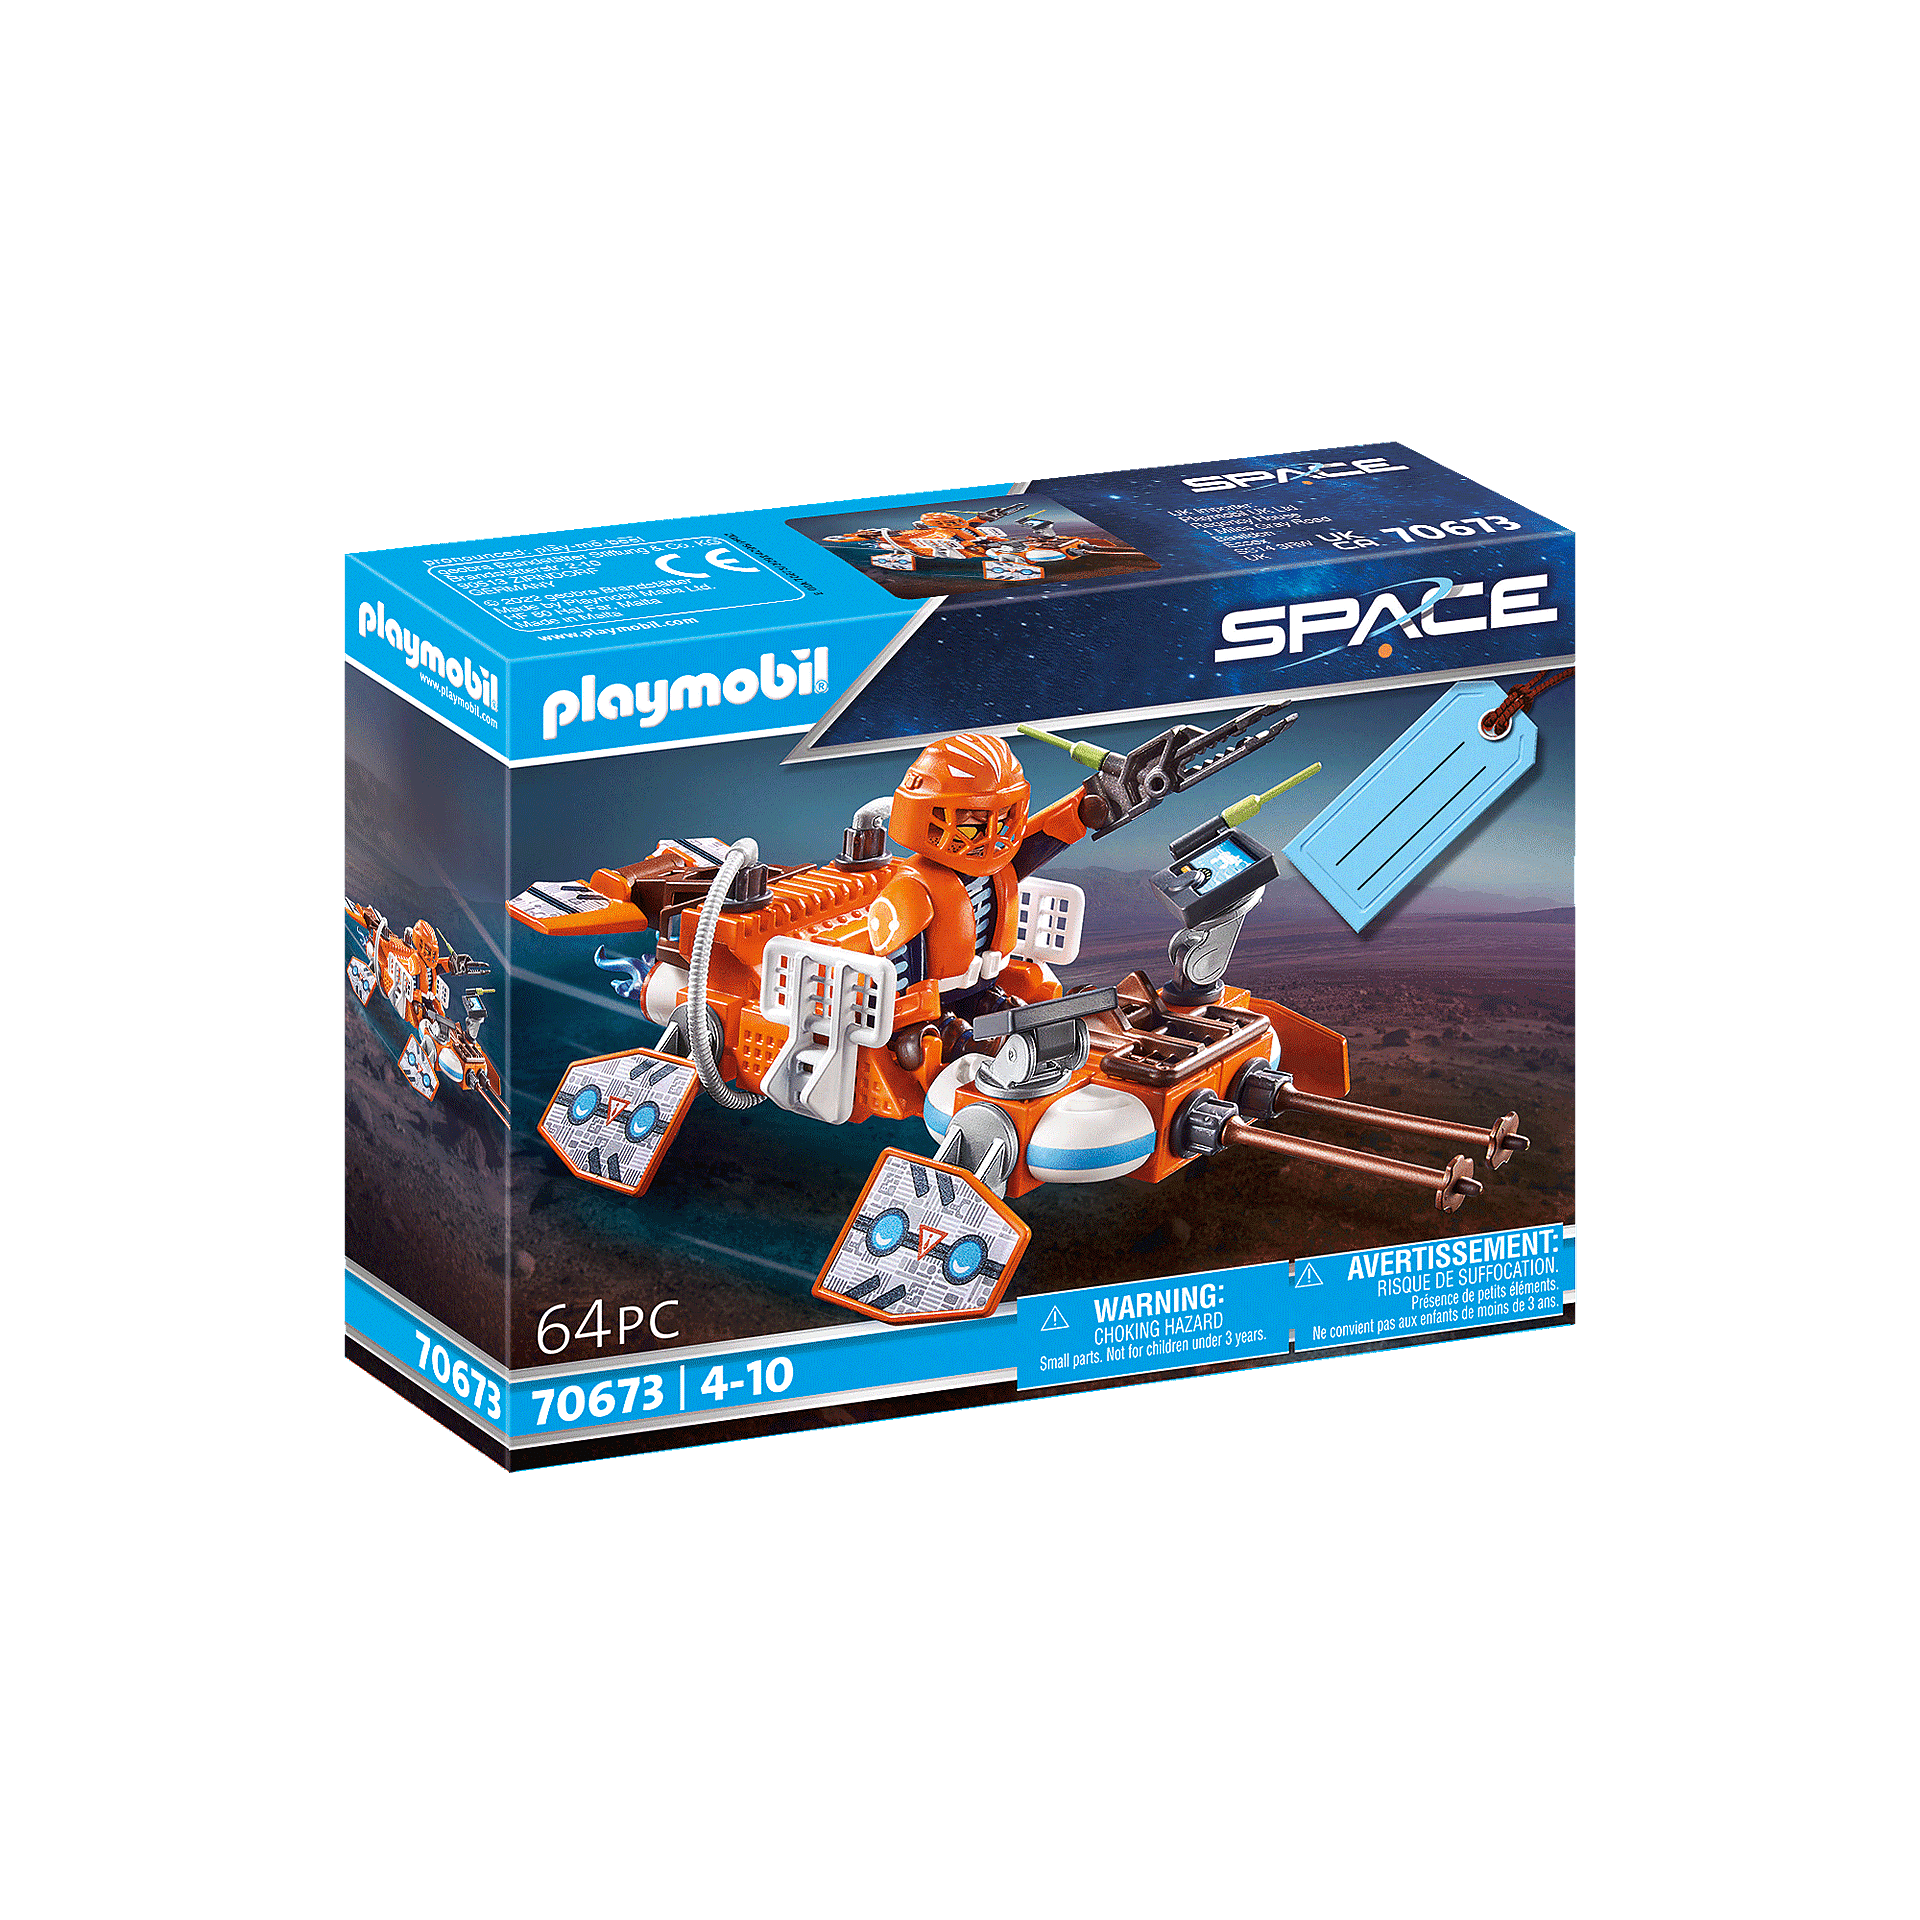 Playmobil-Space - Space Ranger Gift Set-70673-Legacy Toys